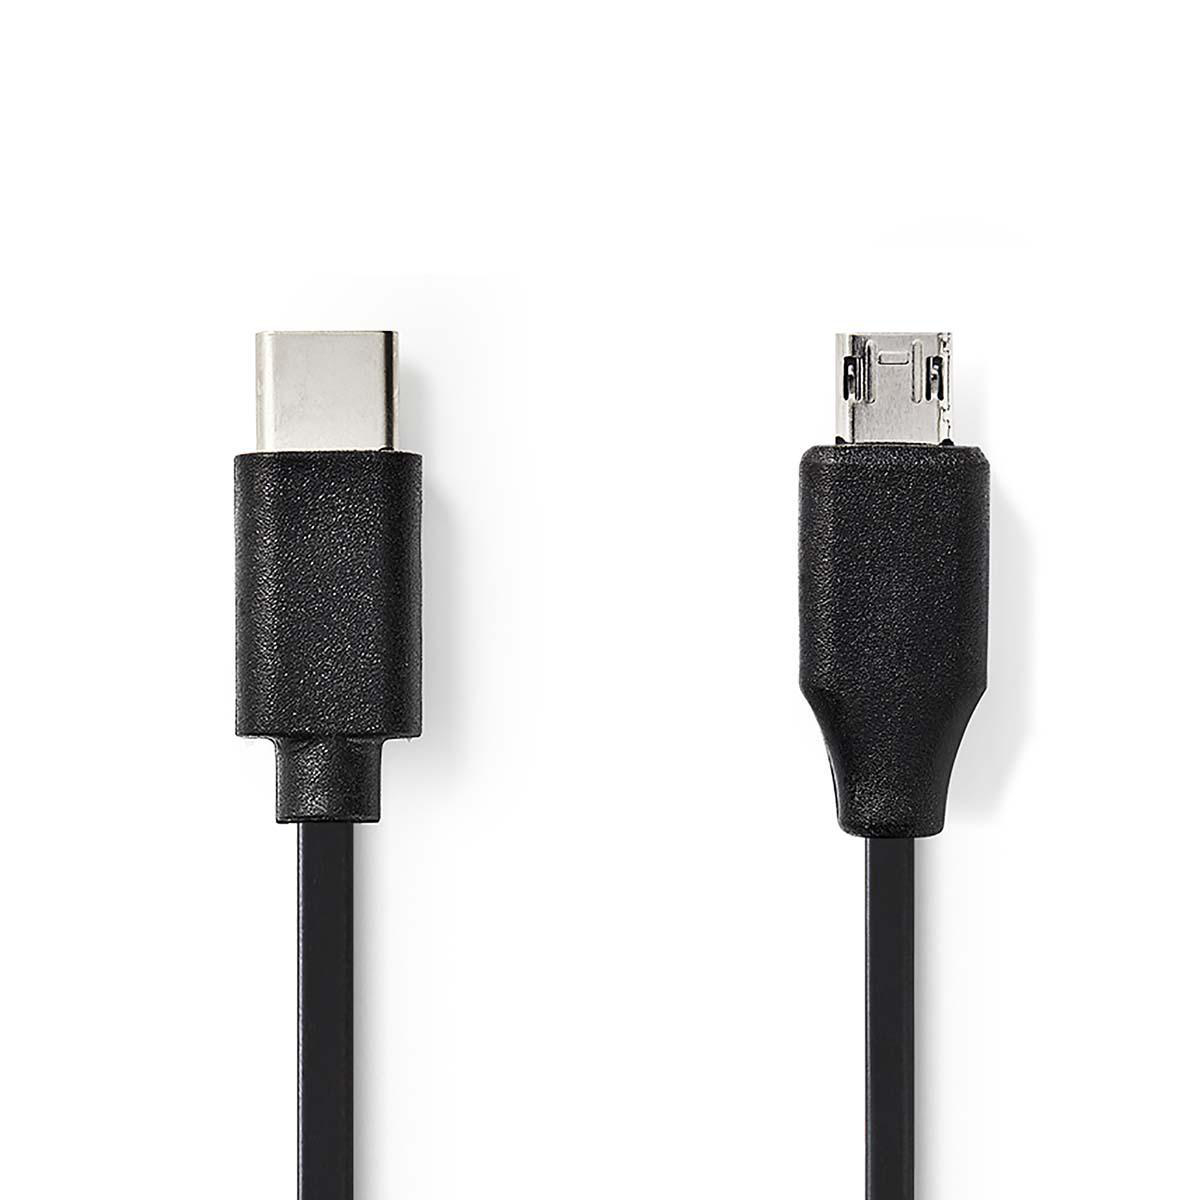 Nedis USB 2.0 kabel, C Male - Micro B Male, 1m, zwart